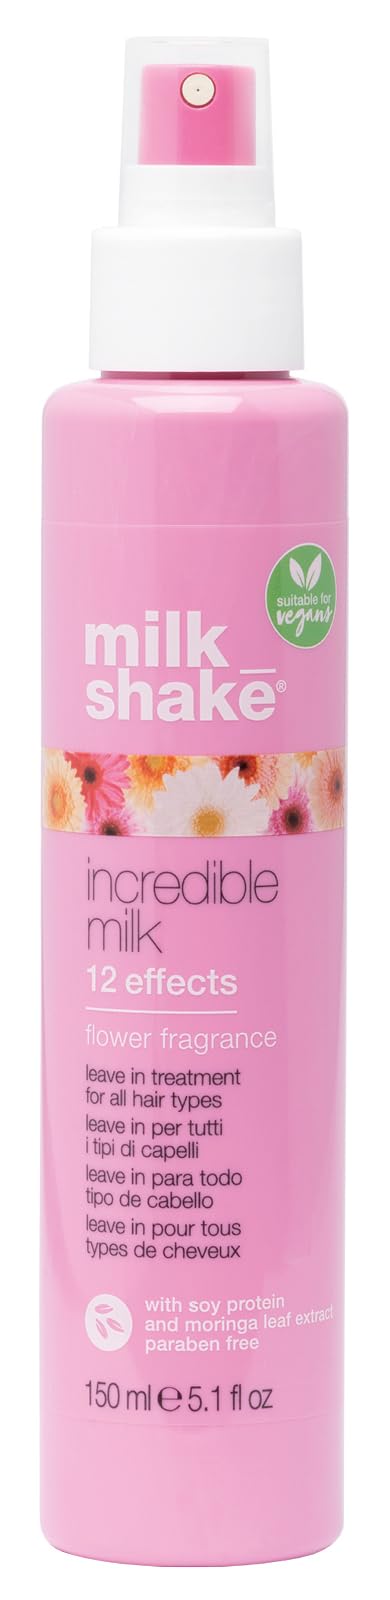 Incredible Milk - 12 Effects - Vegan